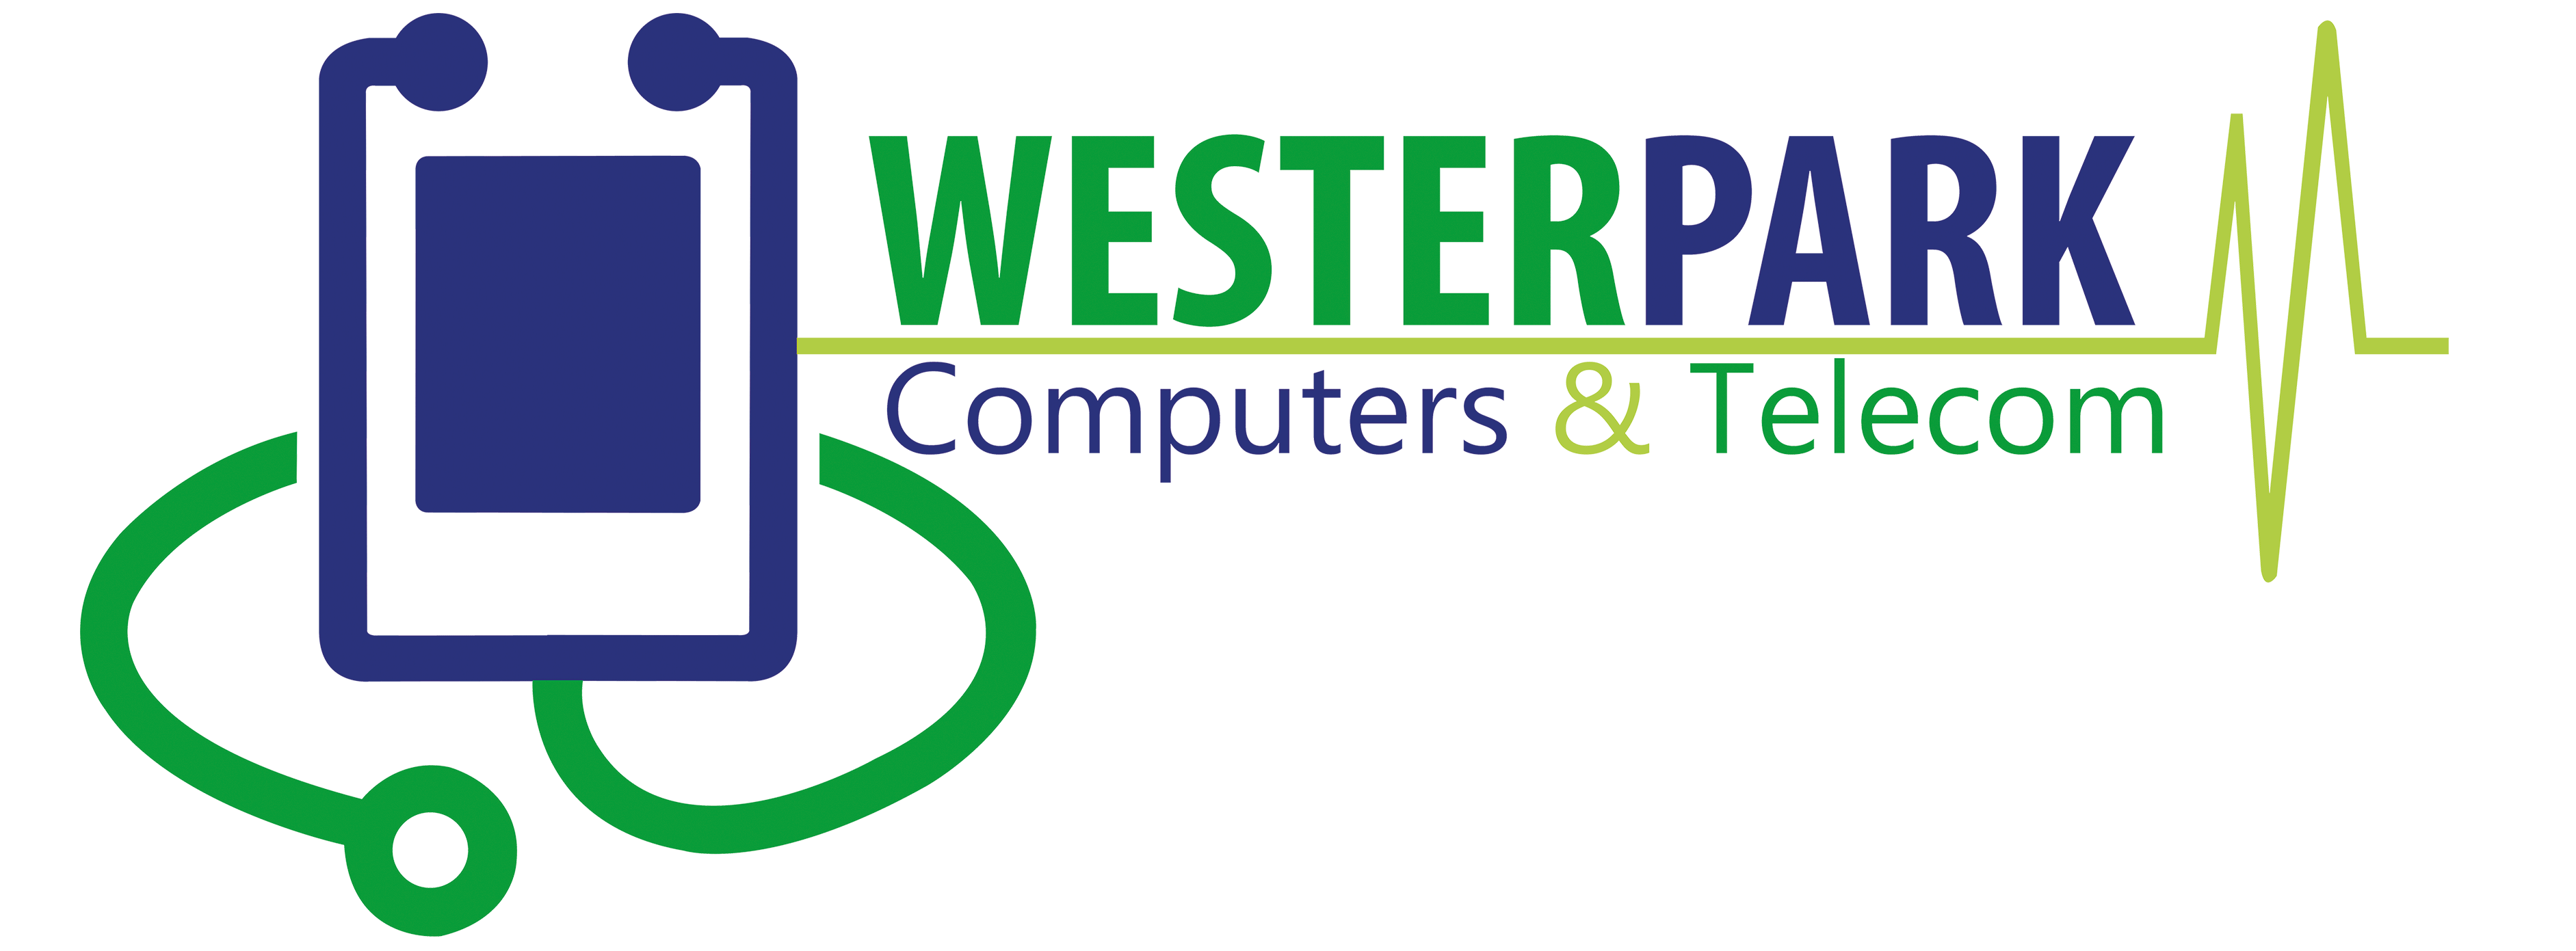 Westerpark Computers & Telecom